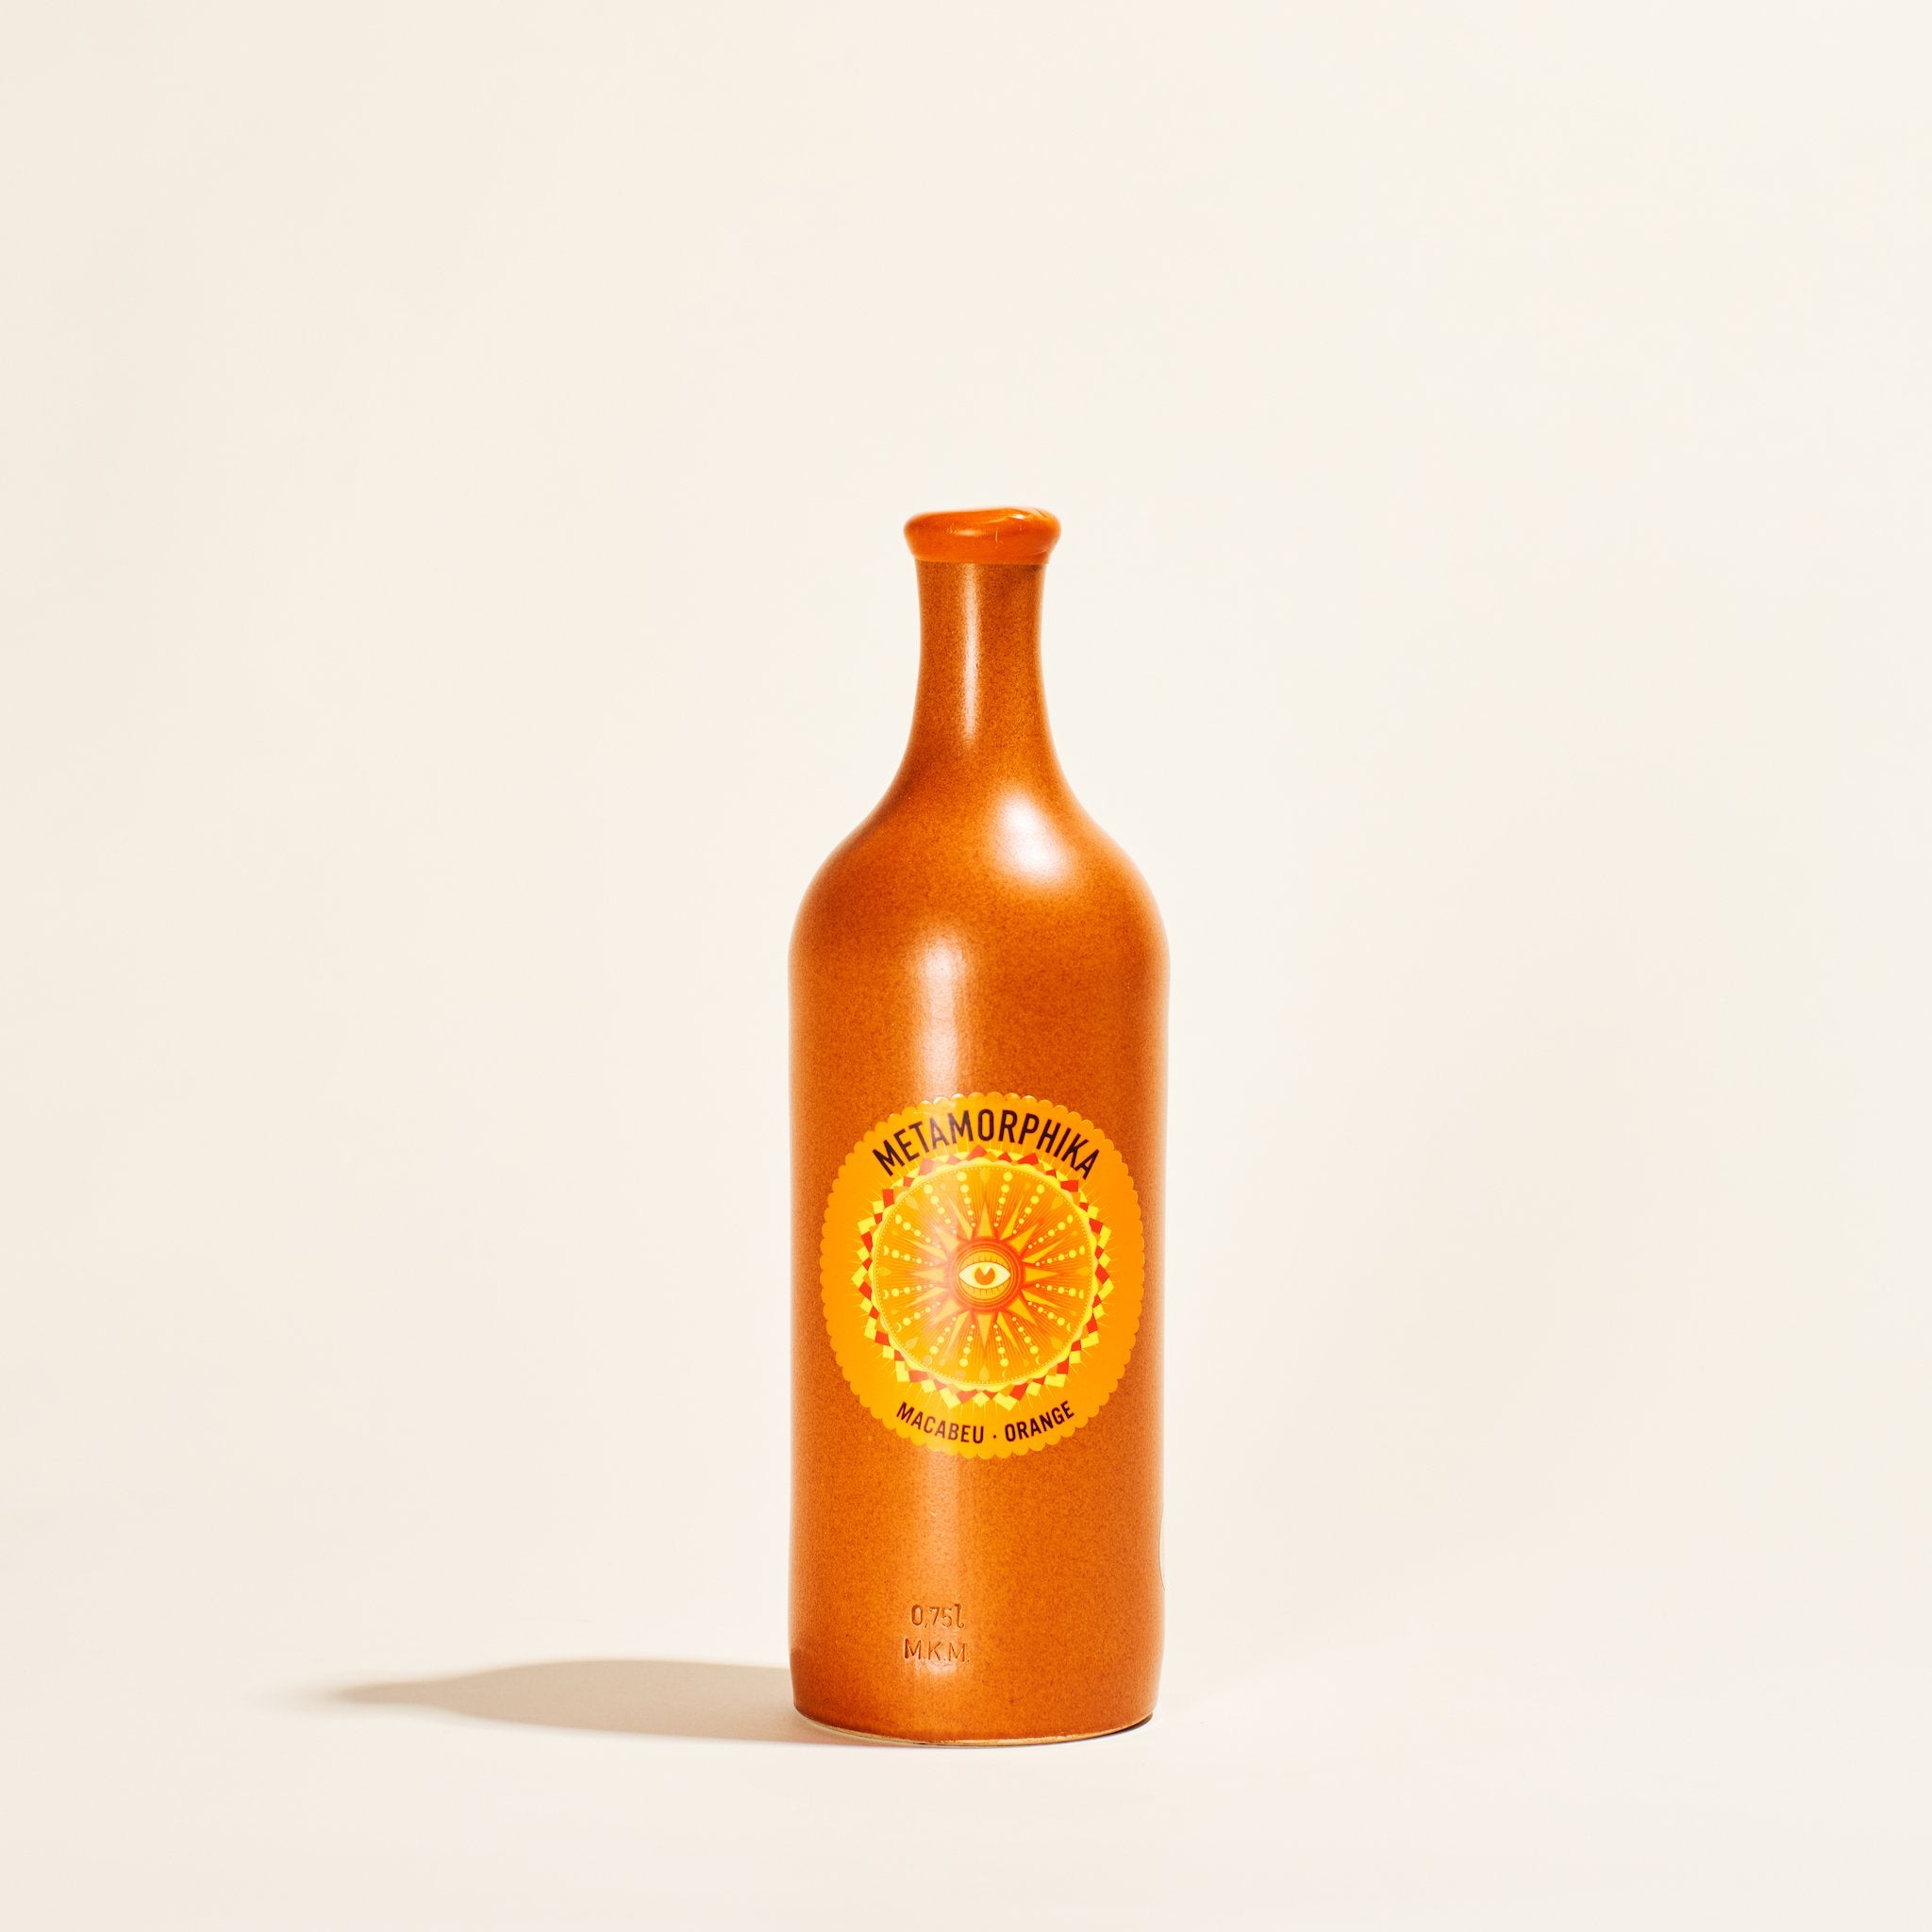 metamorphika macabeu orange costador catalunya spain natural white orange wine